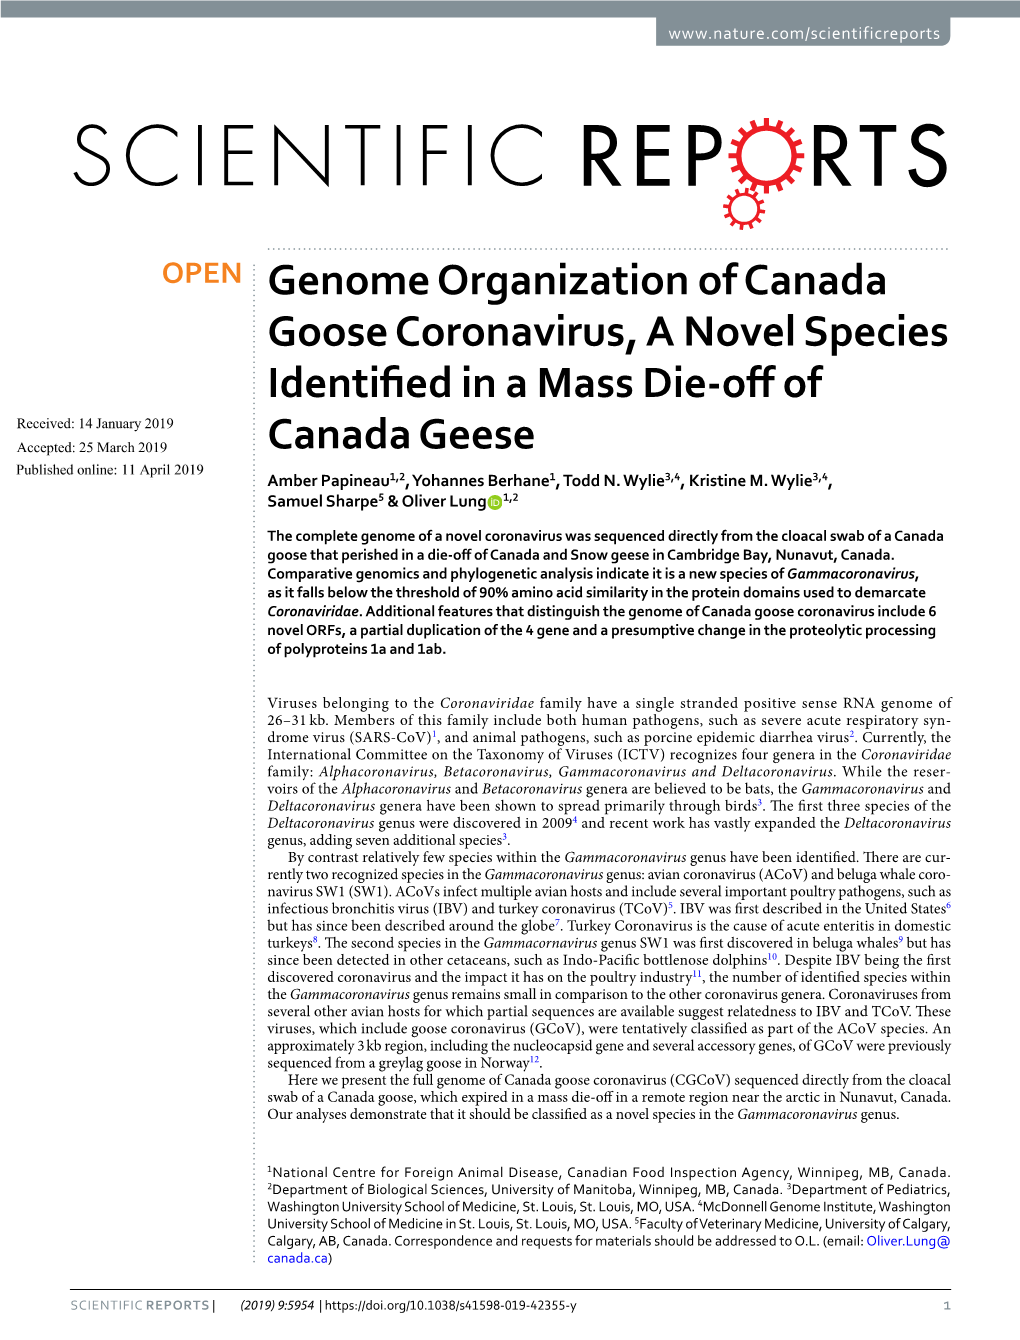 Genome Organization of Canada Goose Coronavirus, a Novel